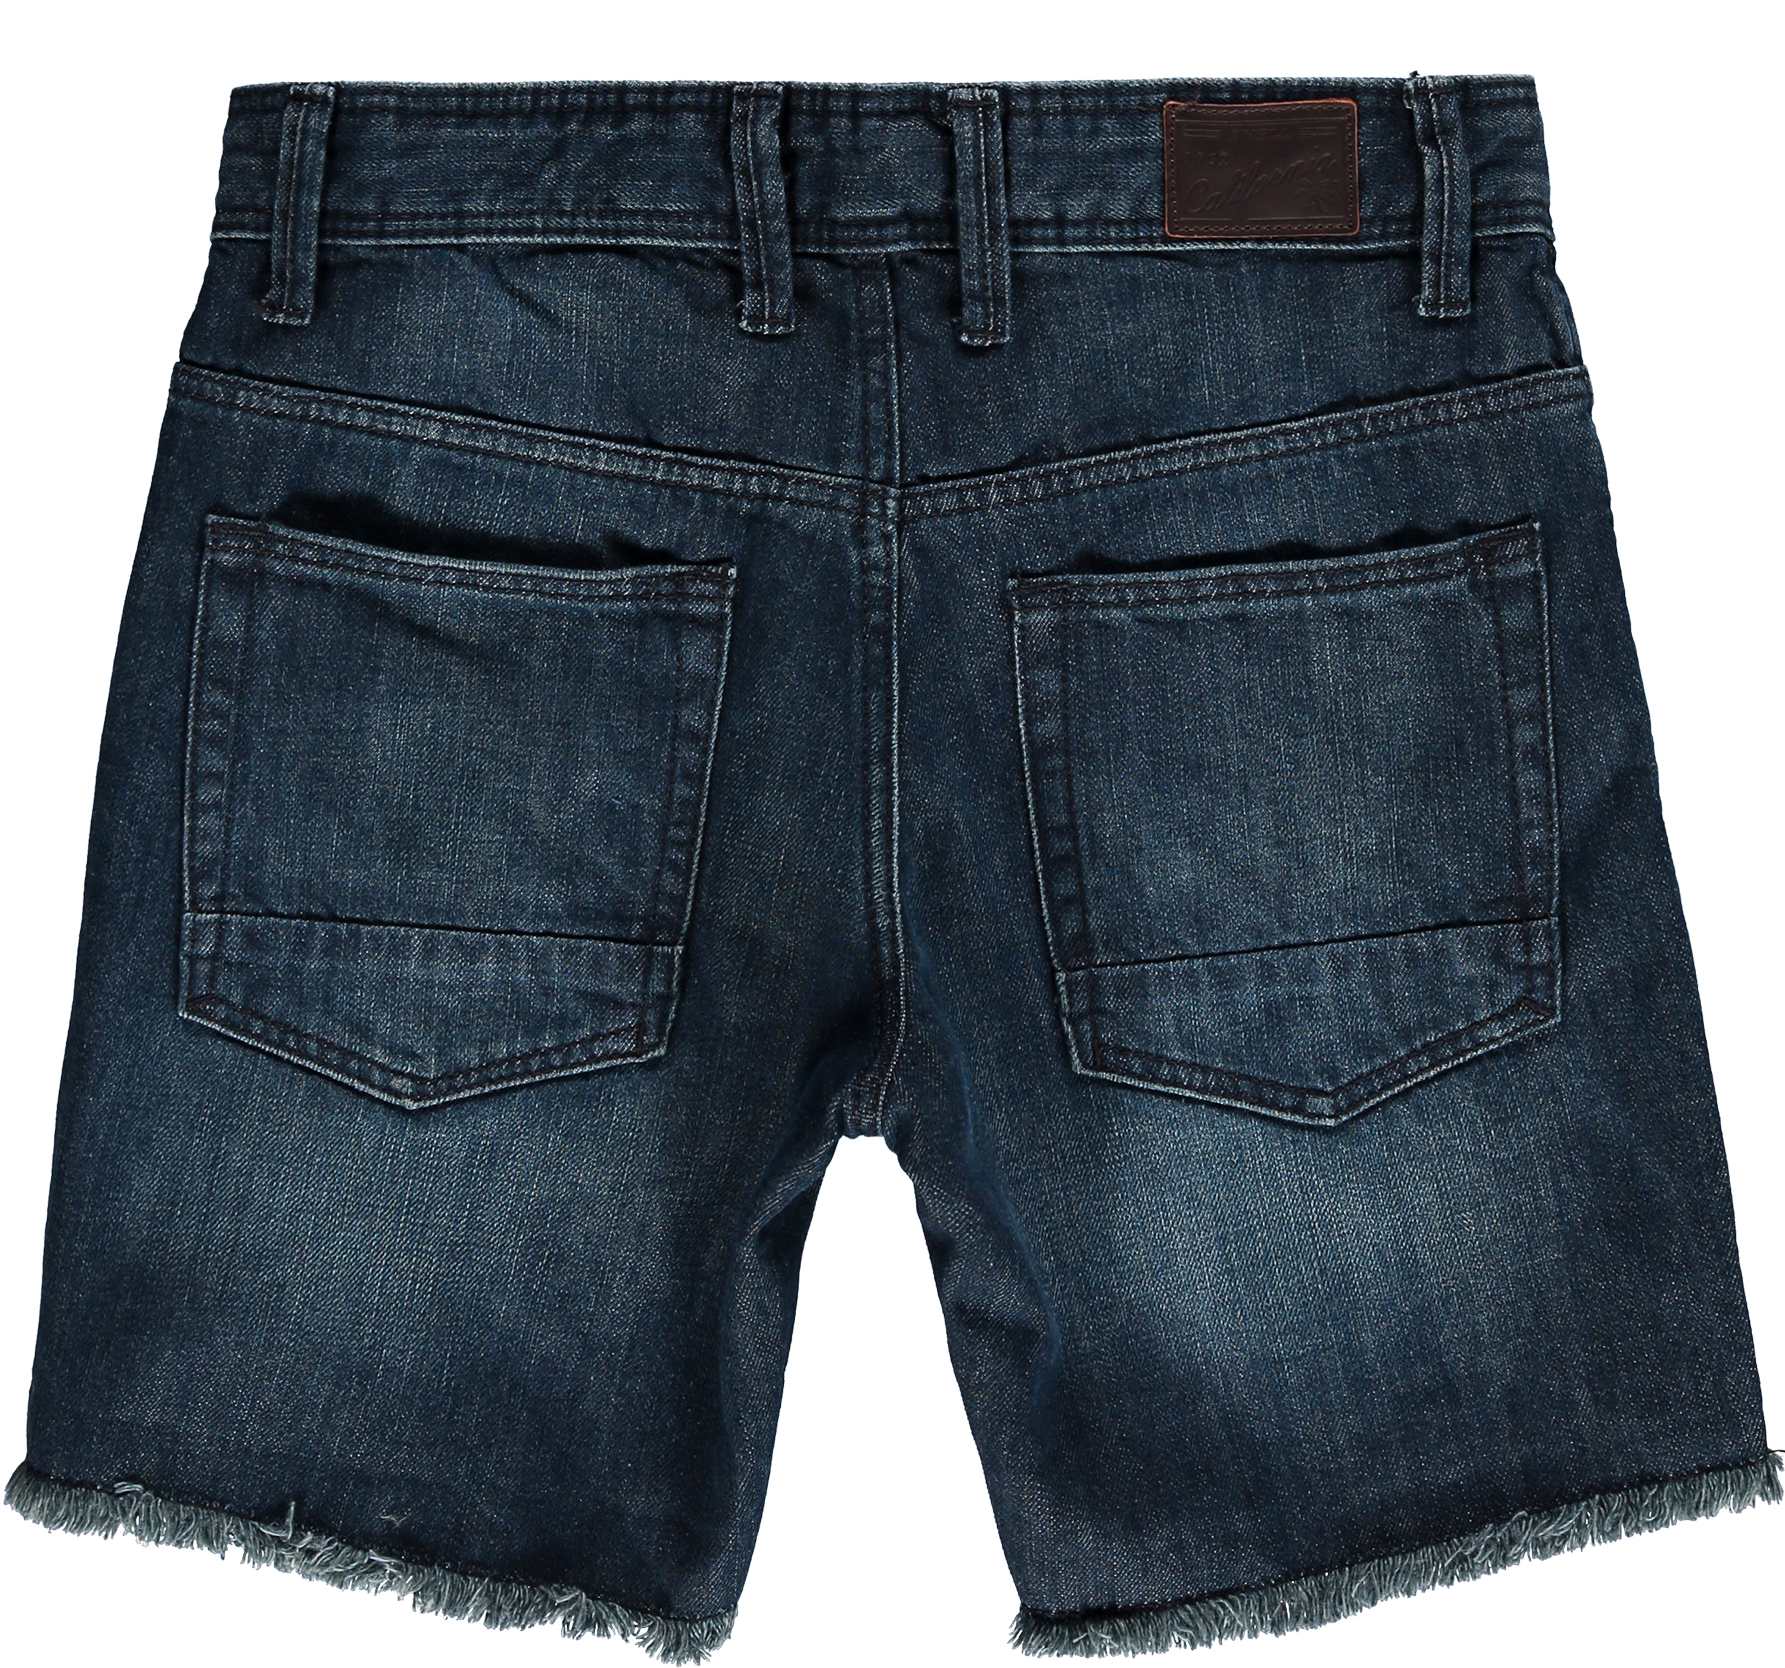 Kids' jean shorts